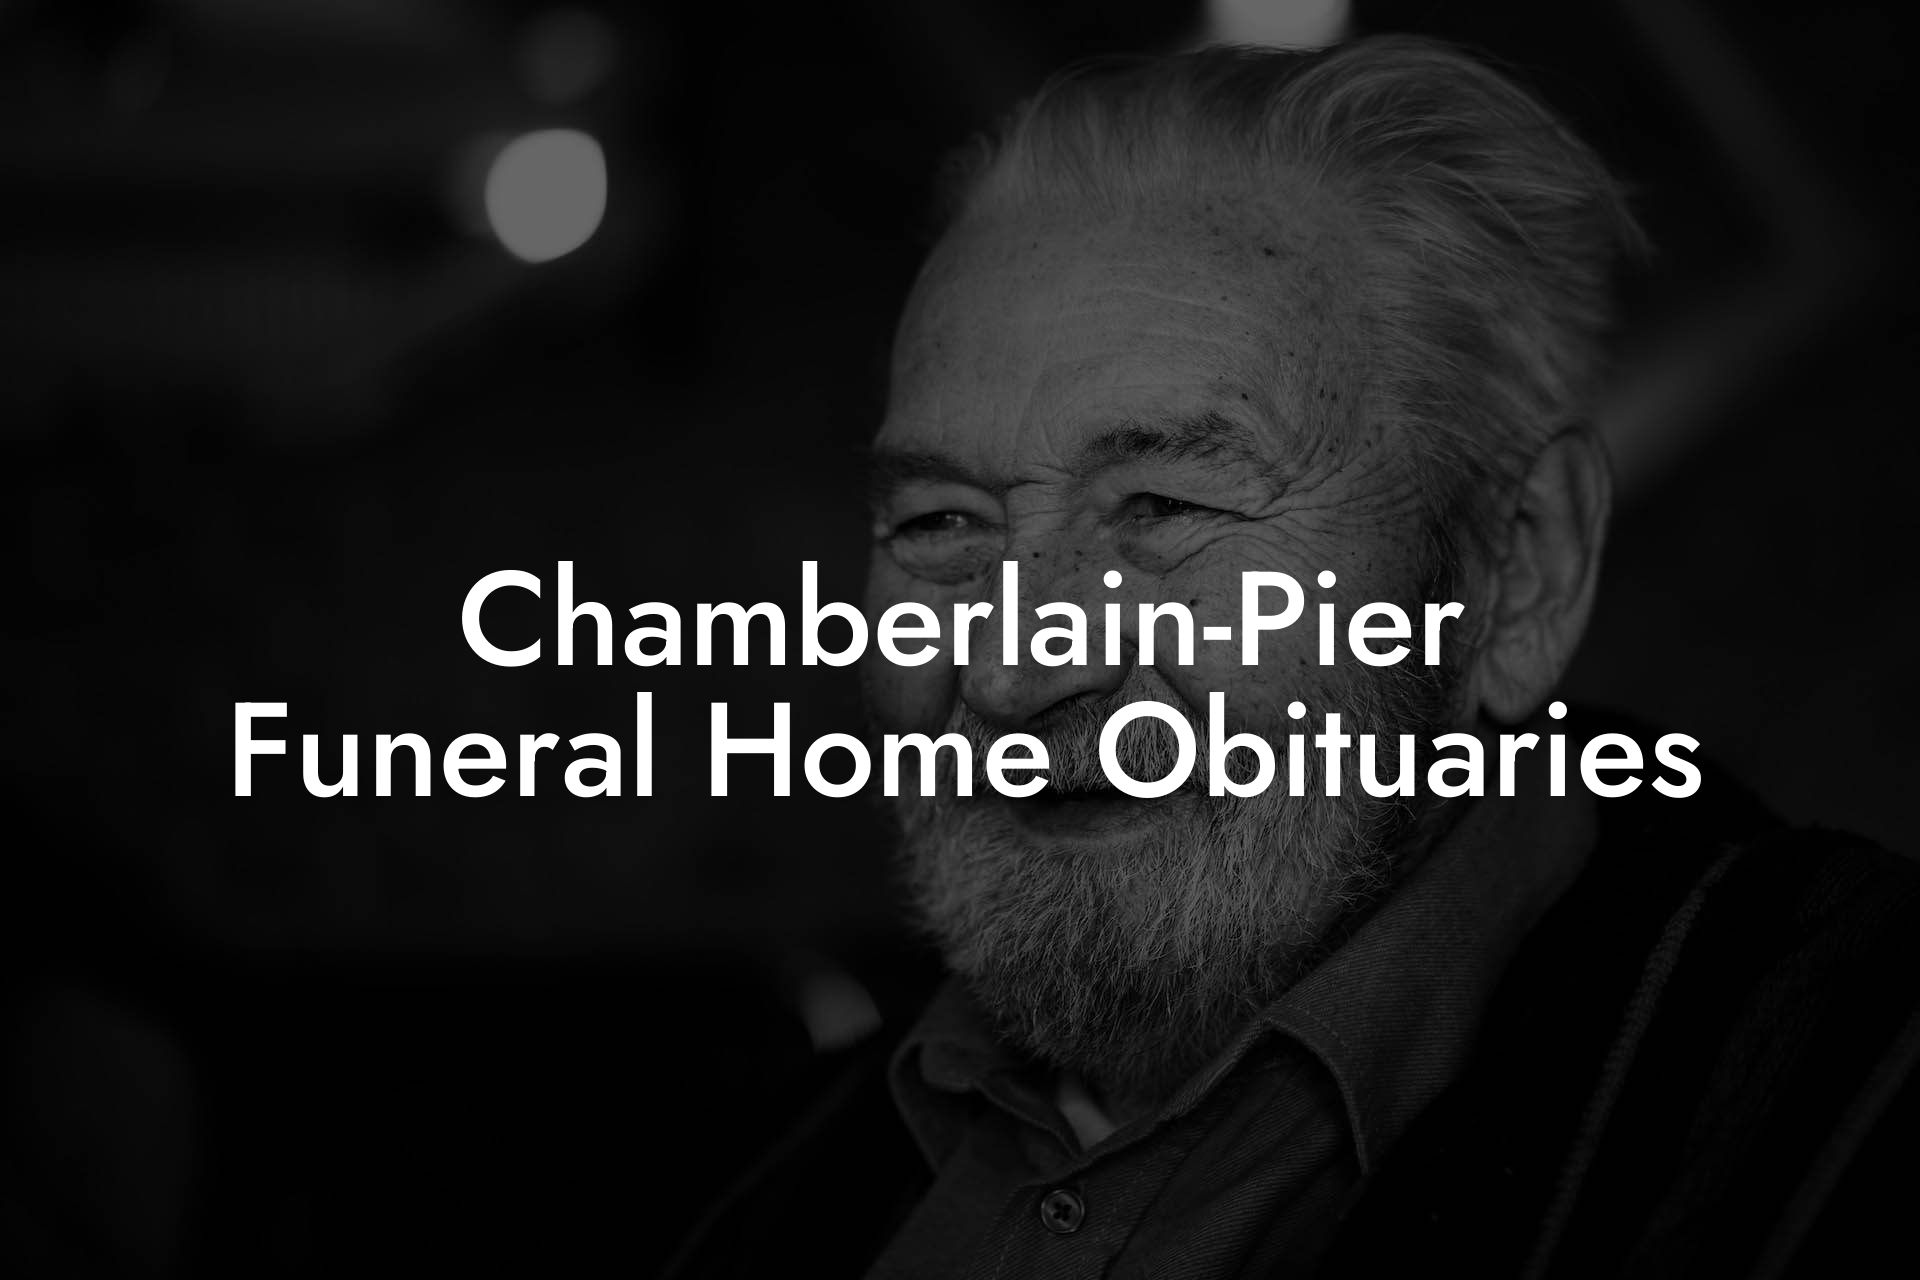 Chamberlain-Pier Funeral Home Obituaries